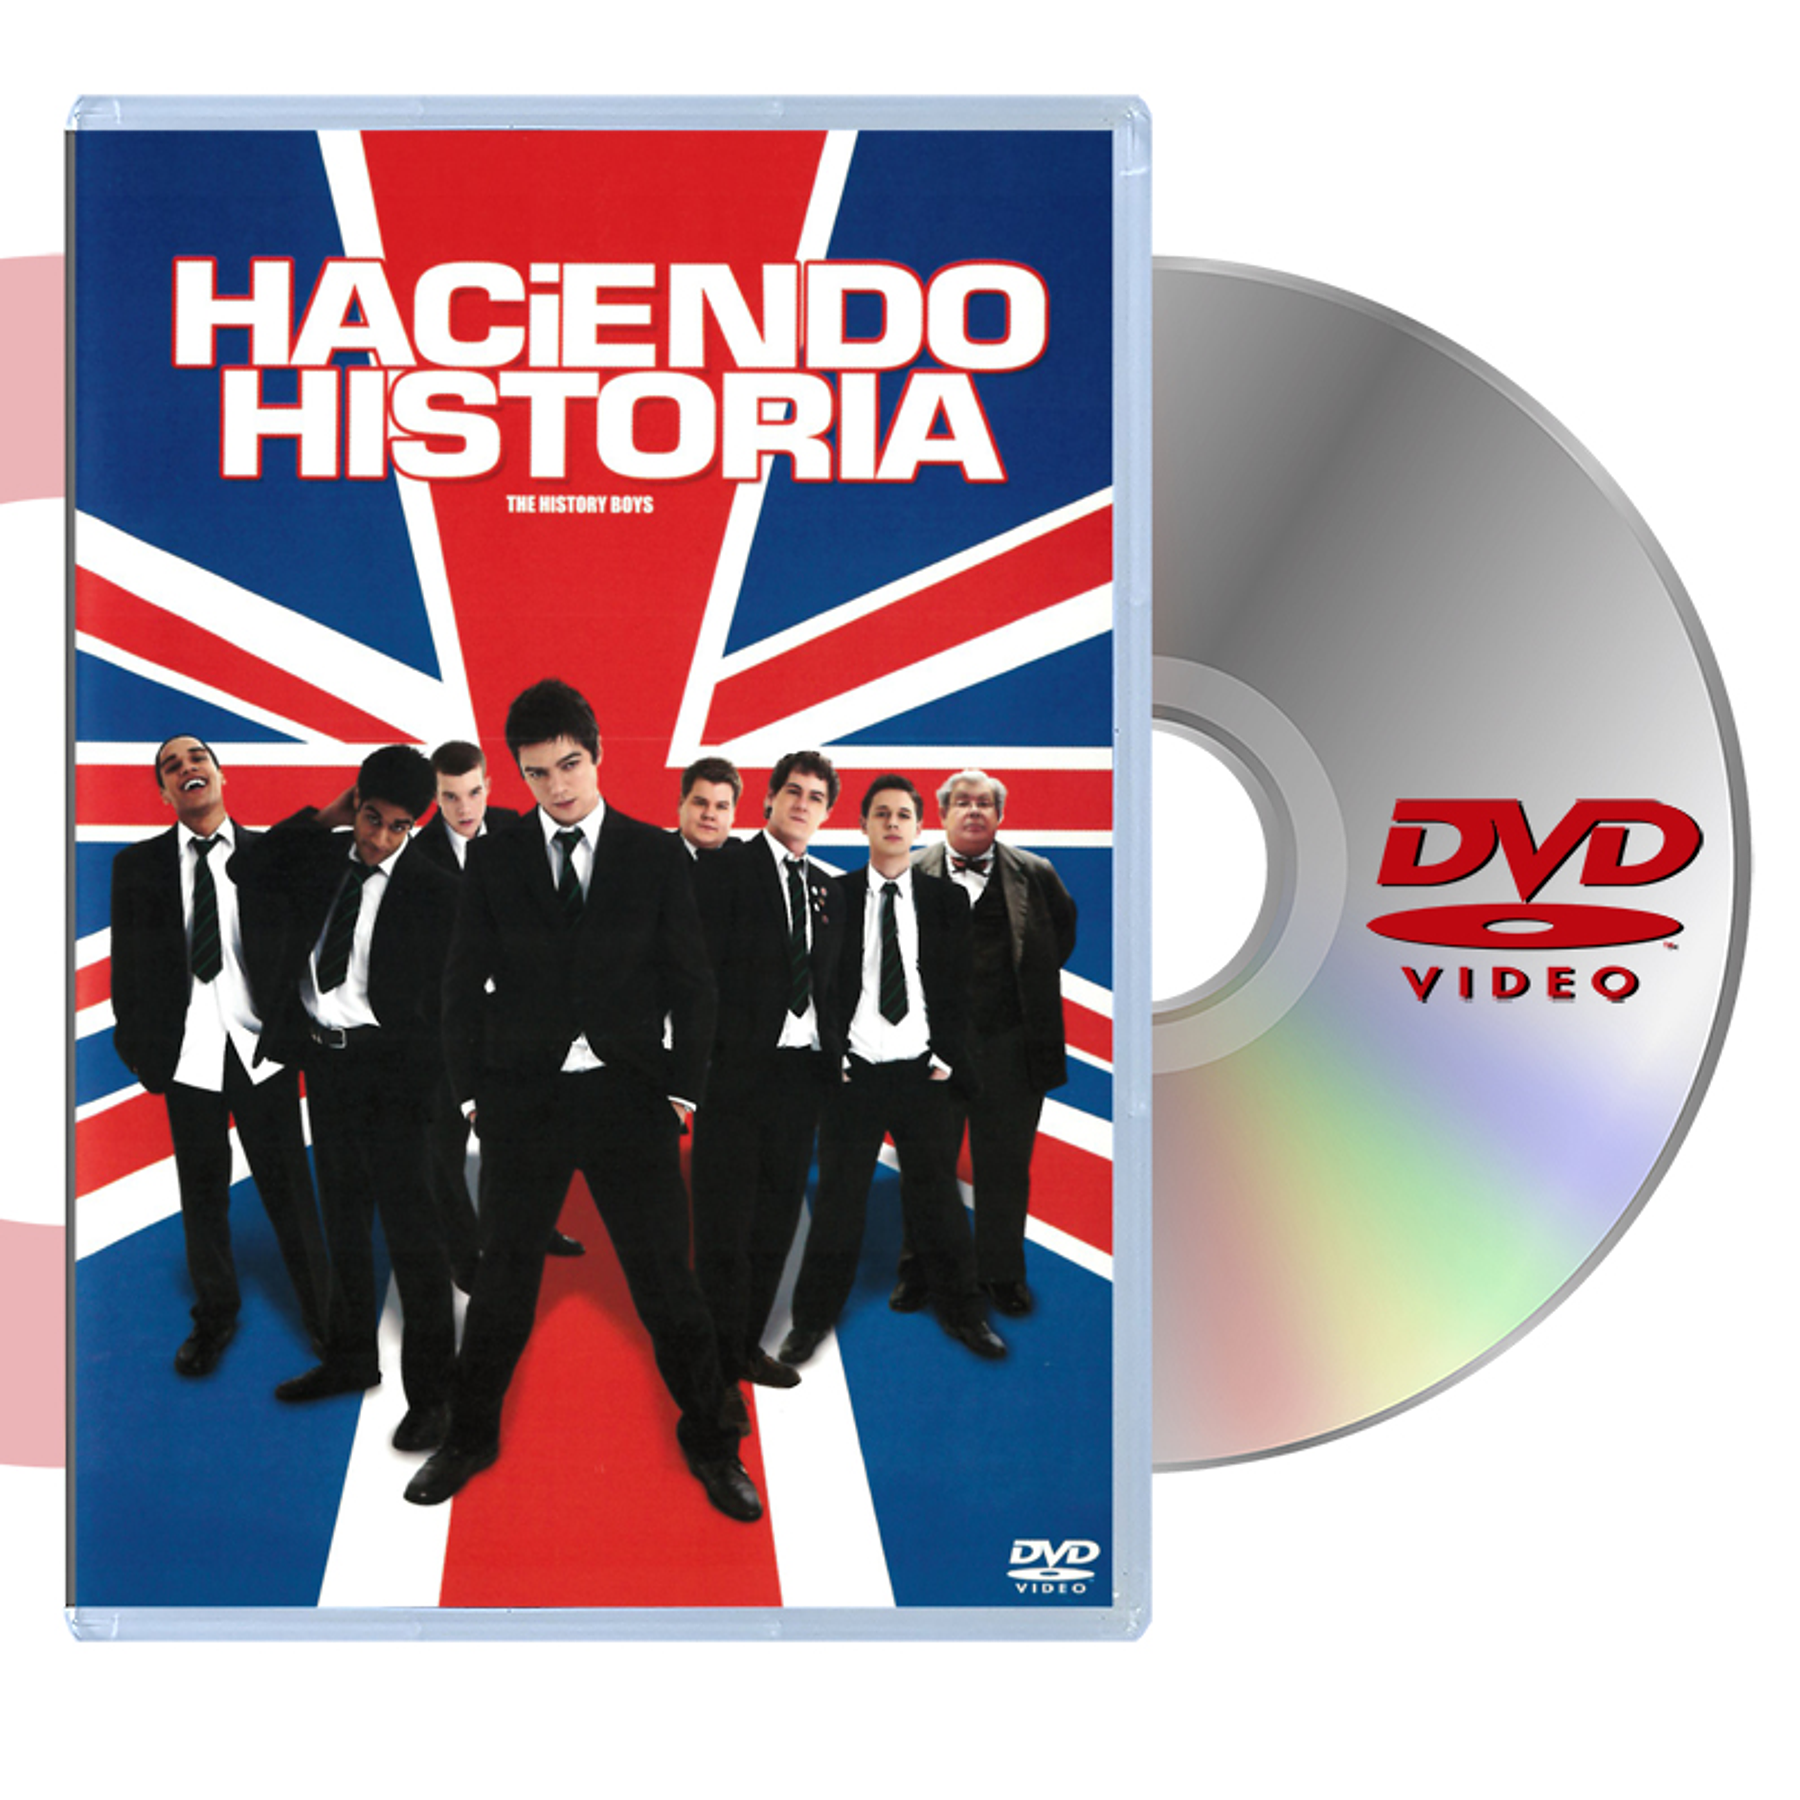 DVD HACIENDO HISTORIA